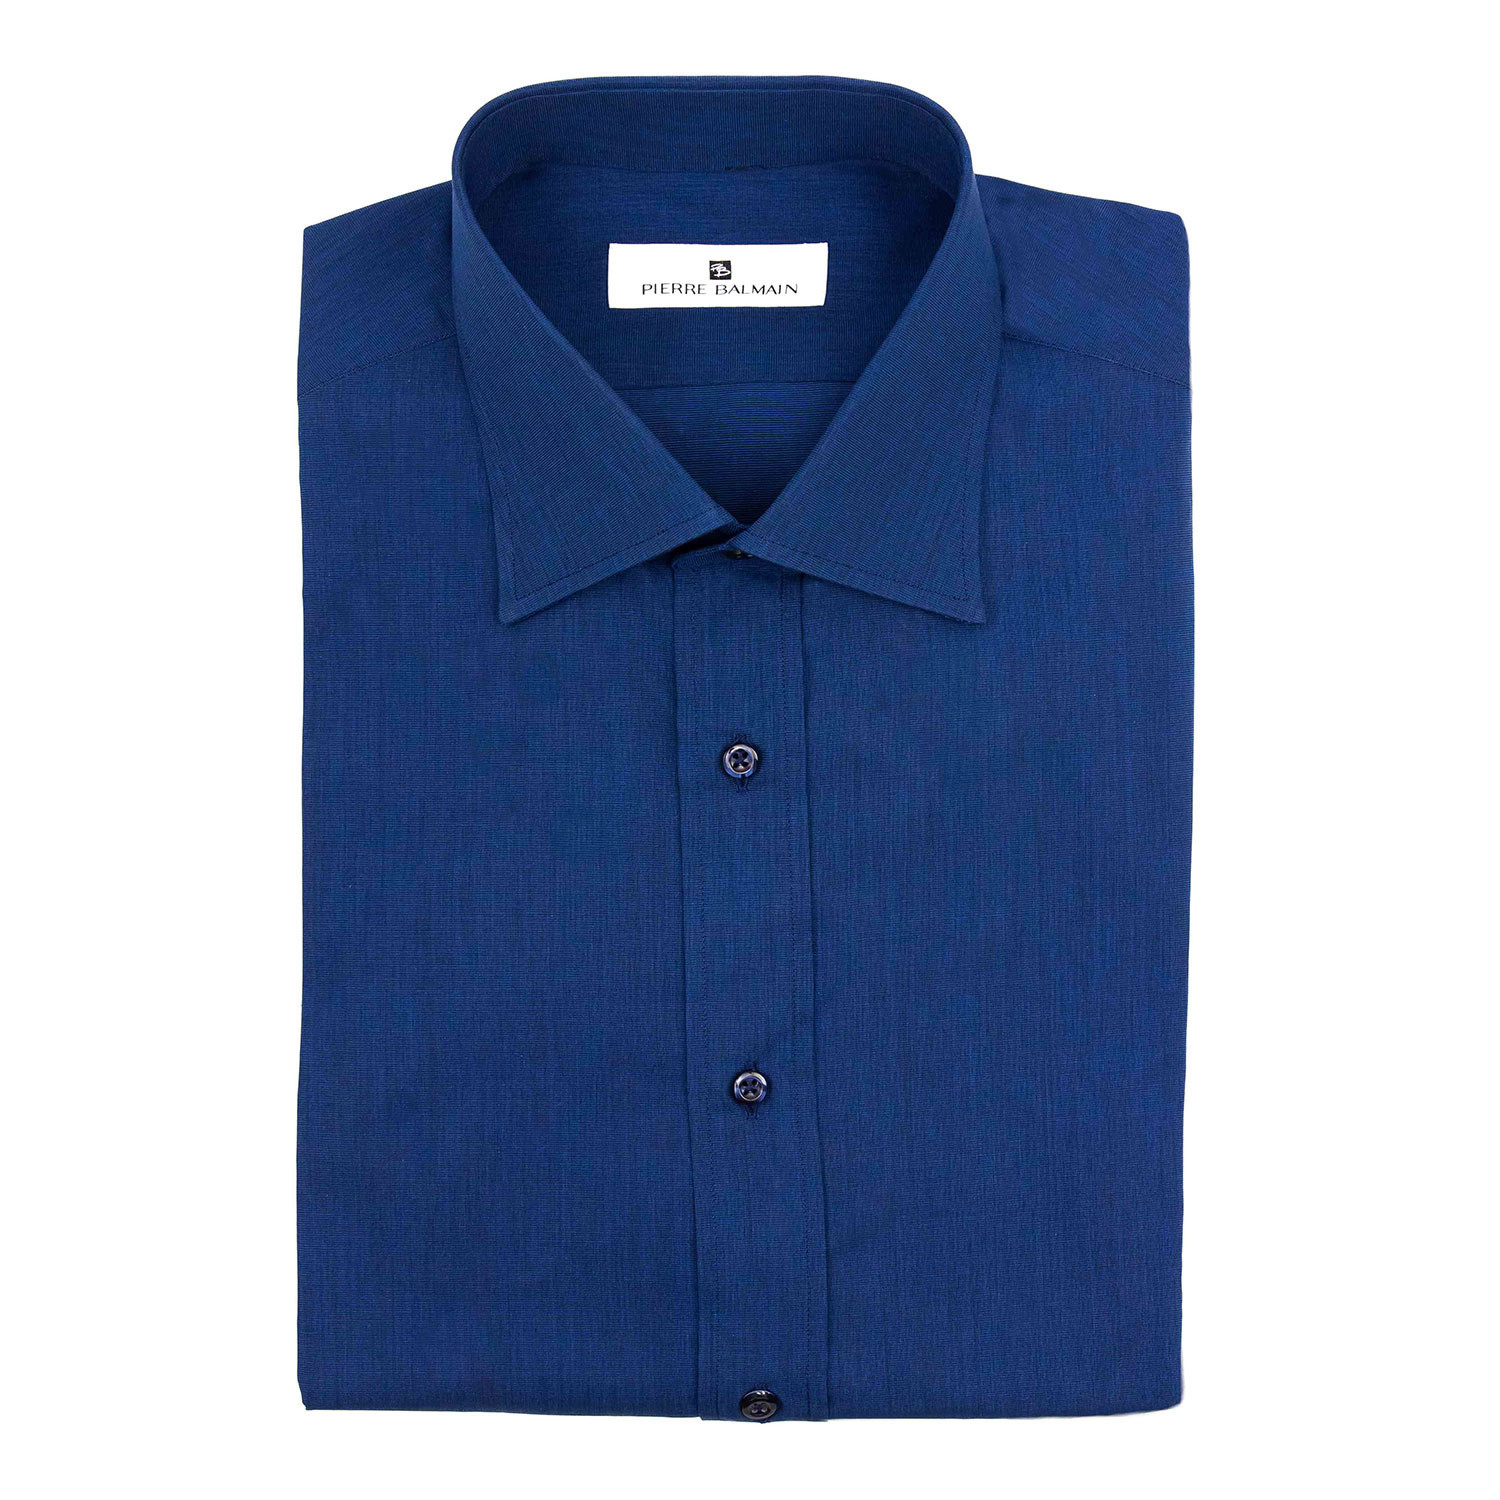 Pierre Balmain Dress Shirt // Navy Blue (US: 16R) - Fashion // Luxe ...